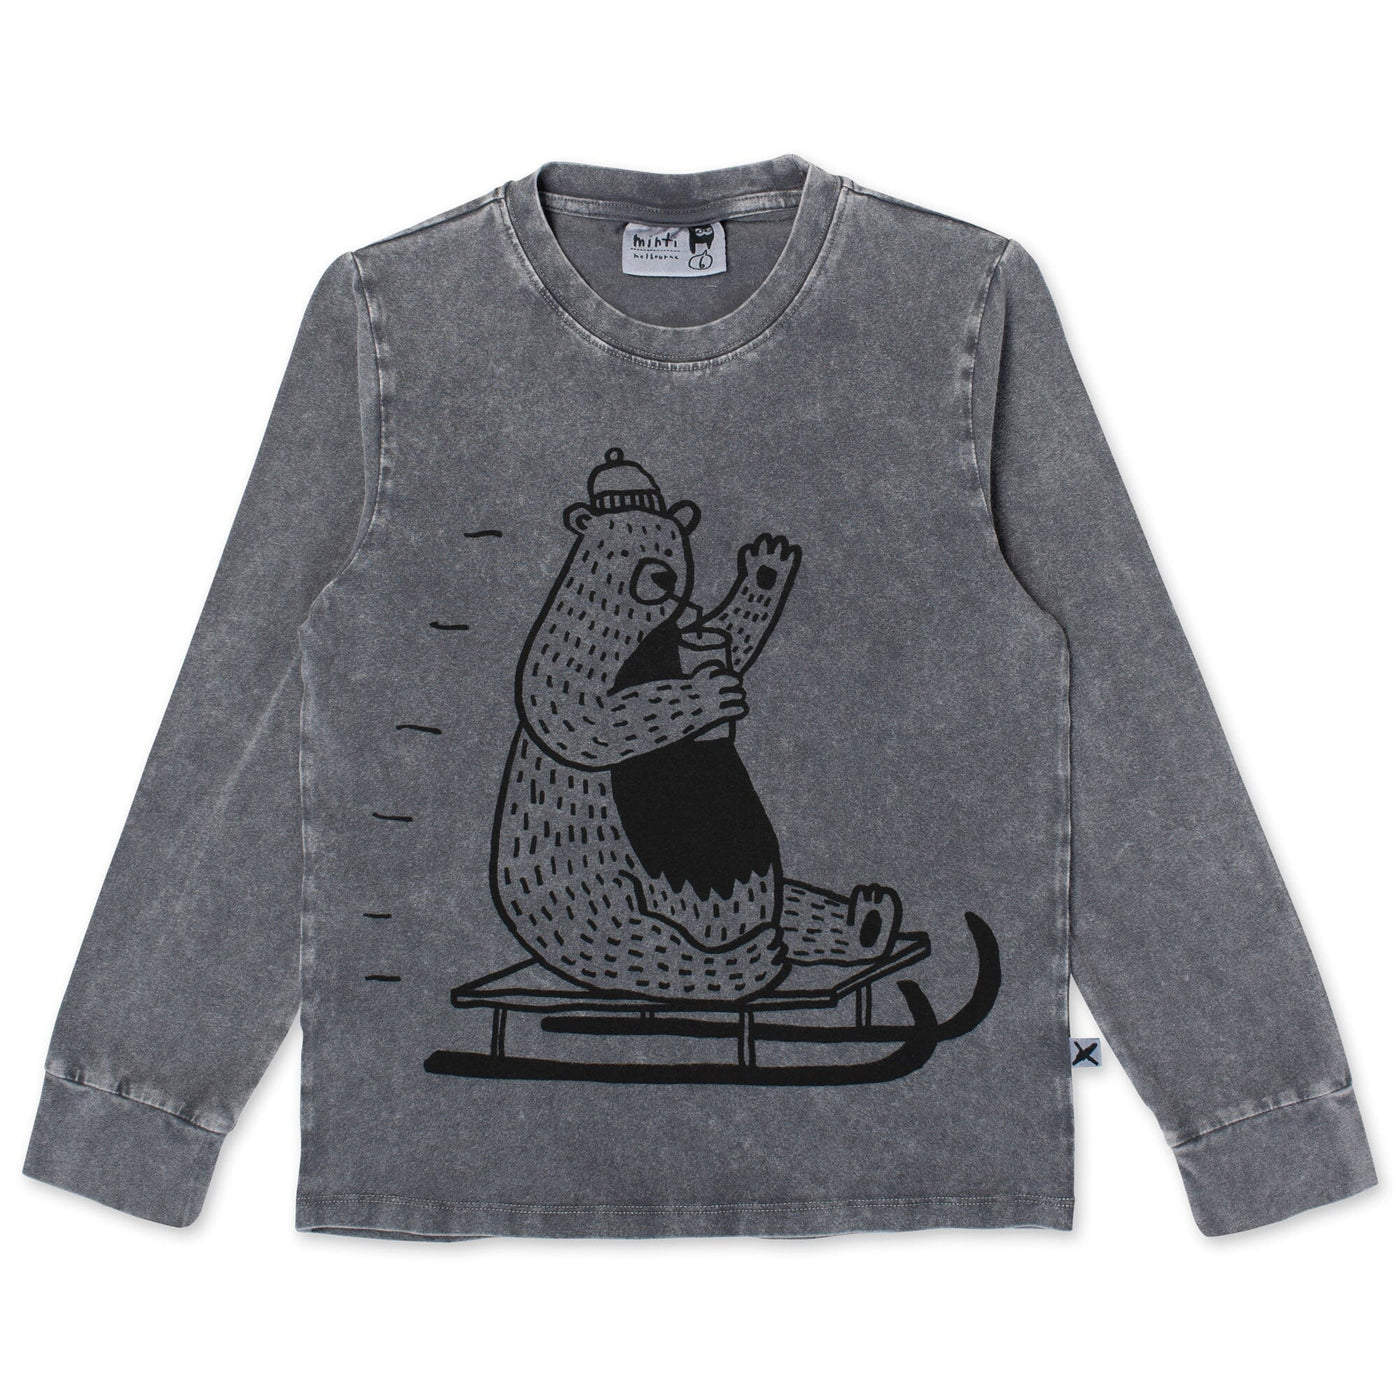 Sled Bear Tee - Grey Wash Long Sleeve T-Shirt Minti 